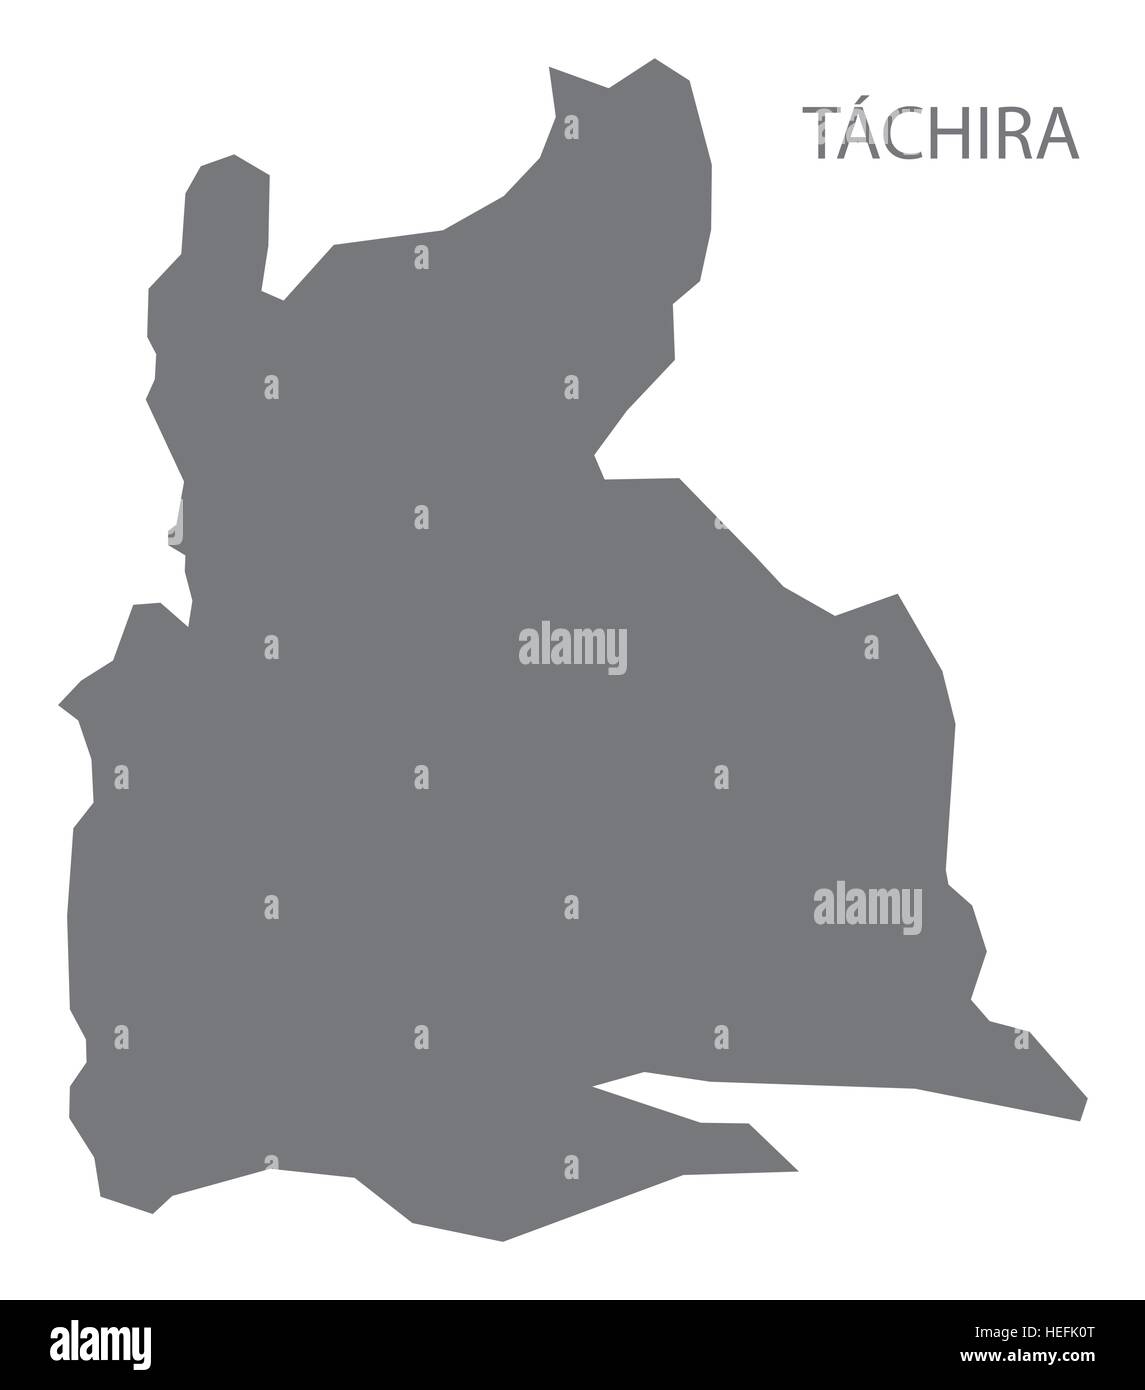 Tachira Venezuela Map in grey Stock Vector